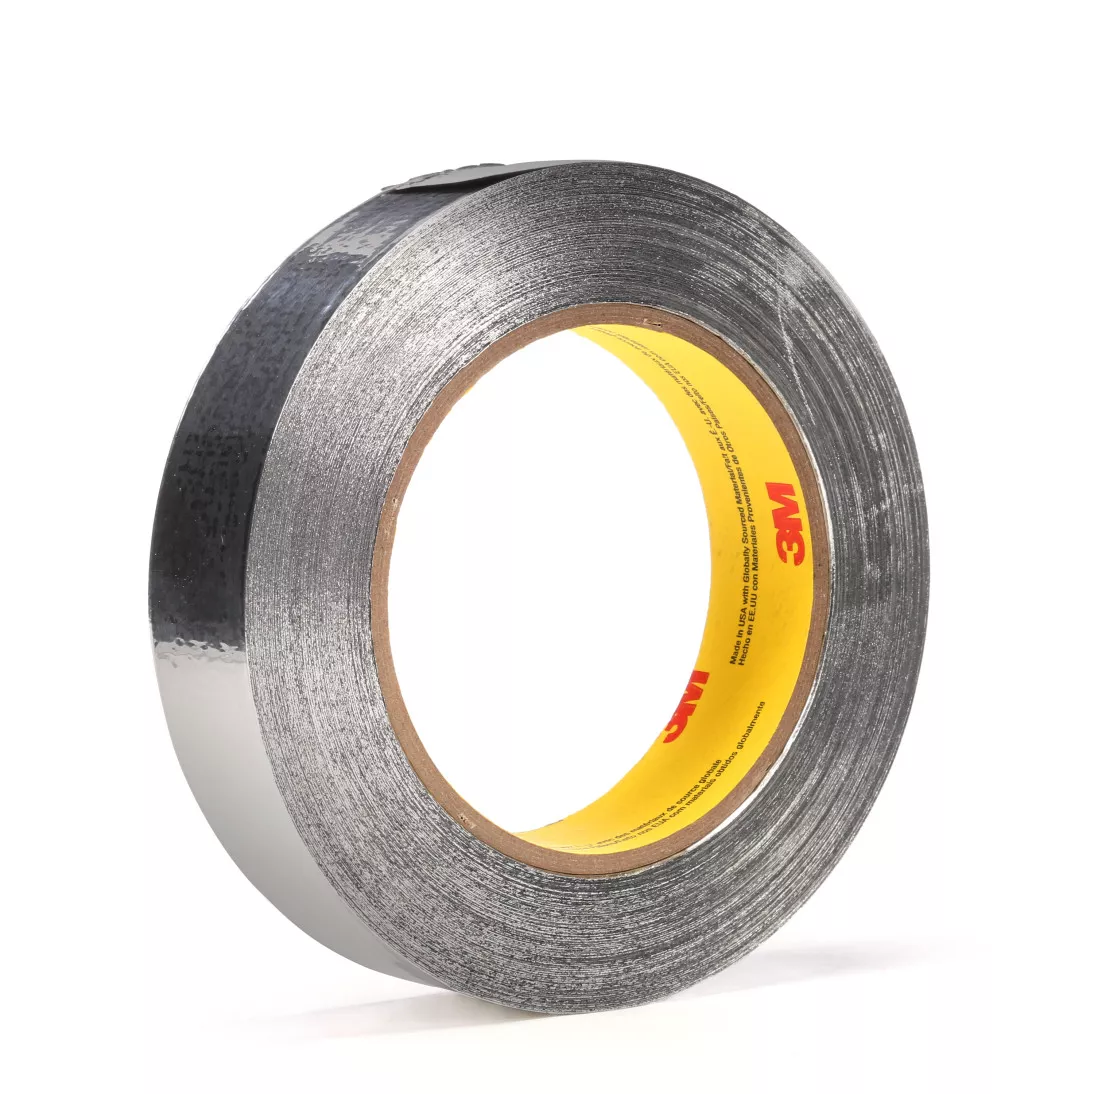 3M™ Aluminum Foil Tape 34383, Silver, 1 in x 60 yd, 4.5 mil, 36 Roll/Case